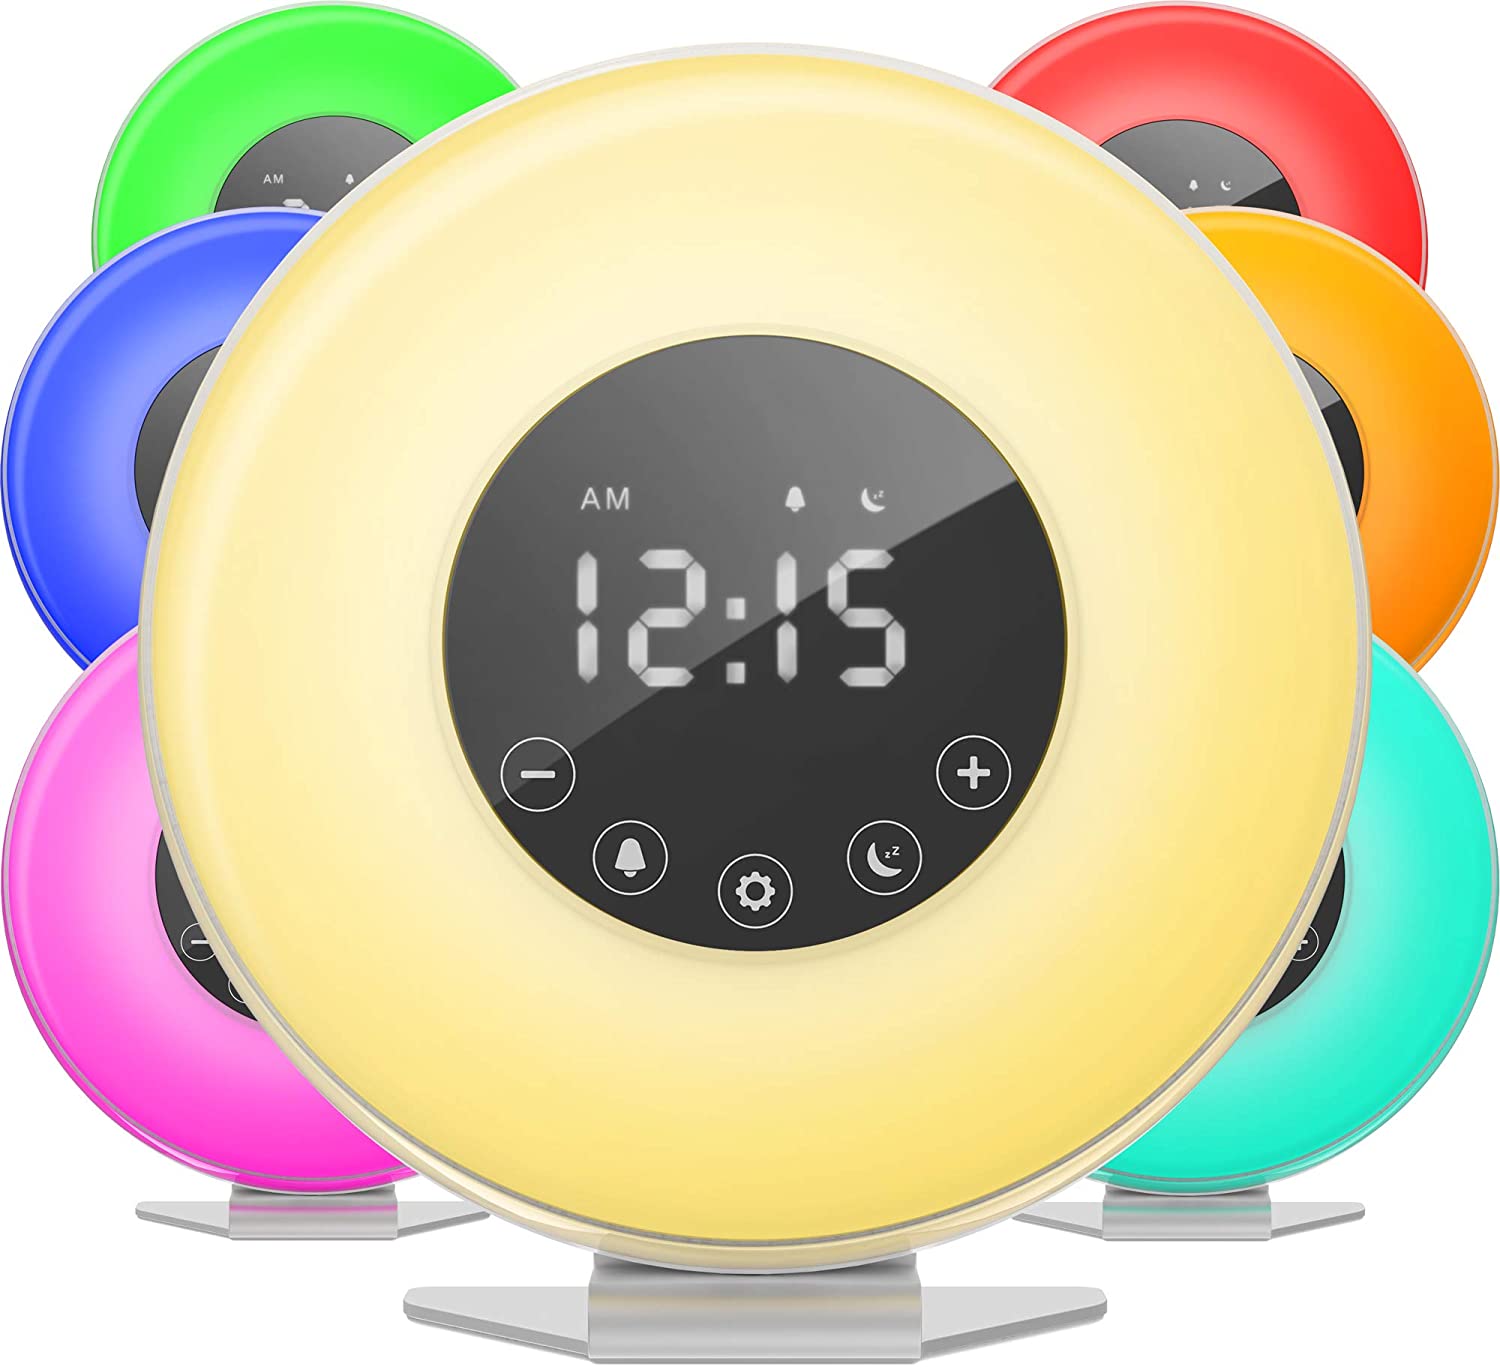 hOmeLabs Sunrise Alarm Clock - Digital LED Clock